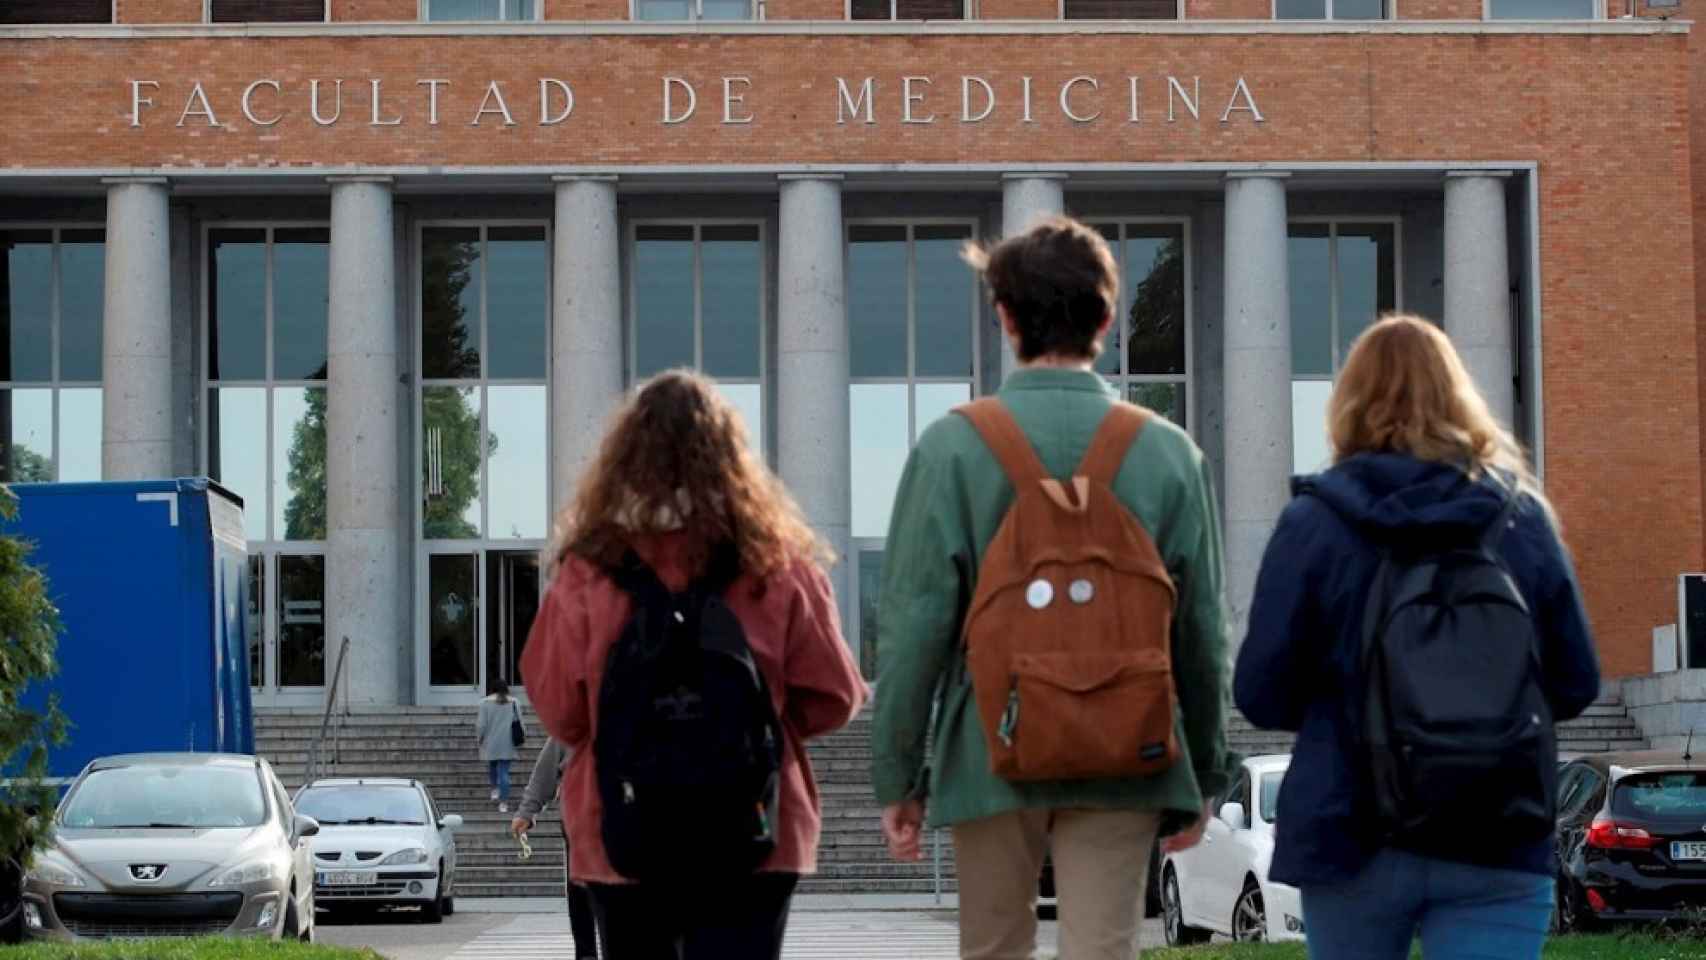 Tres estudiantes se dirigen a la Facultad de Medicina